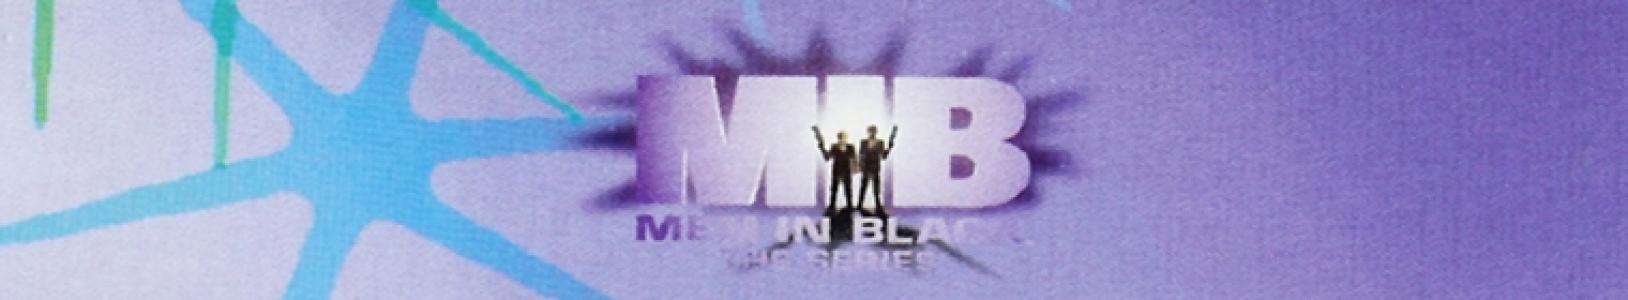 Men in Black: The Series banner